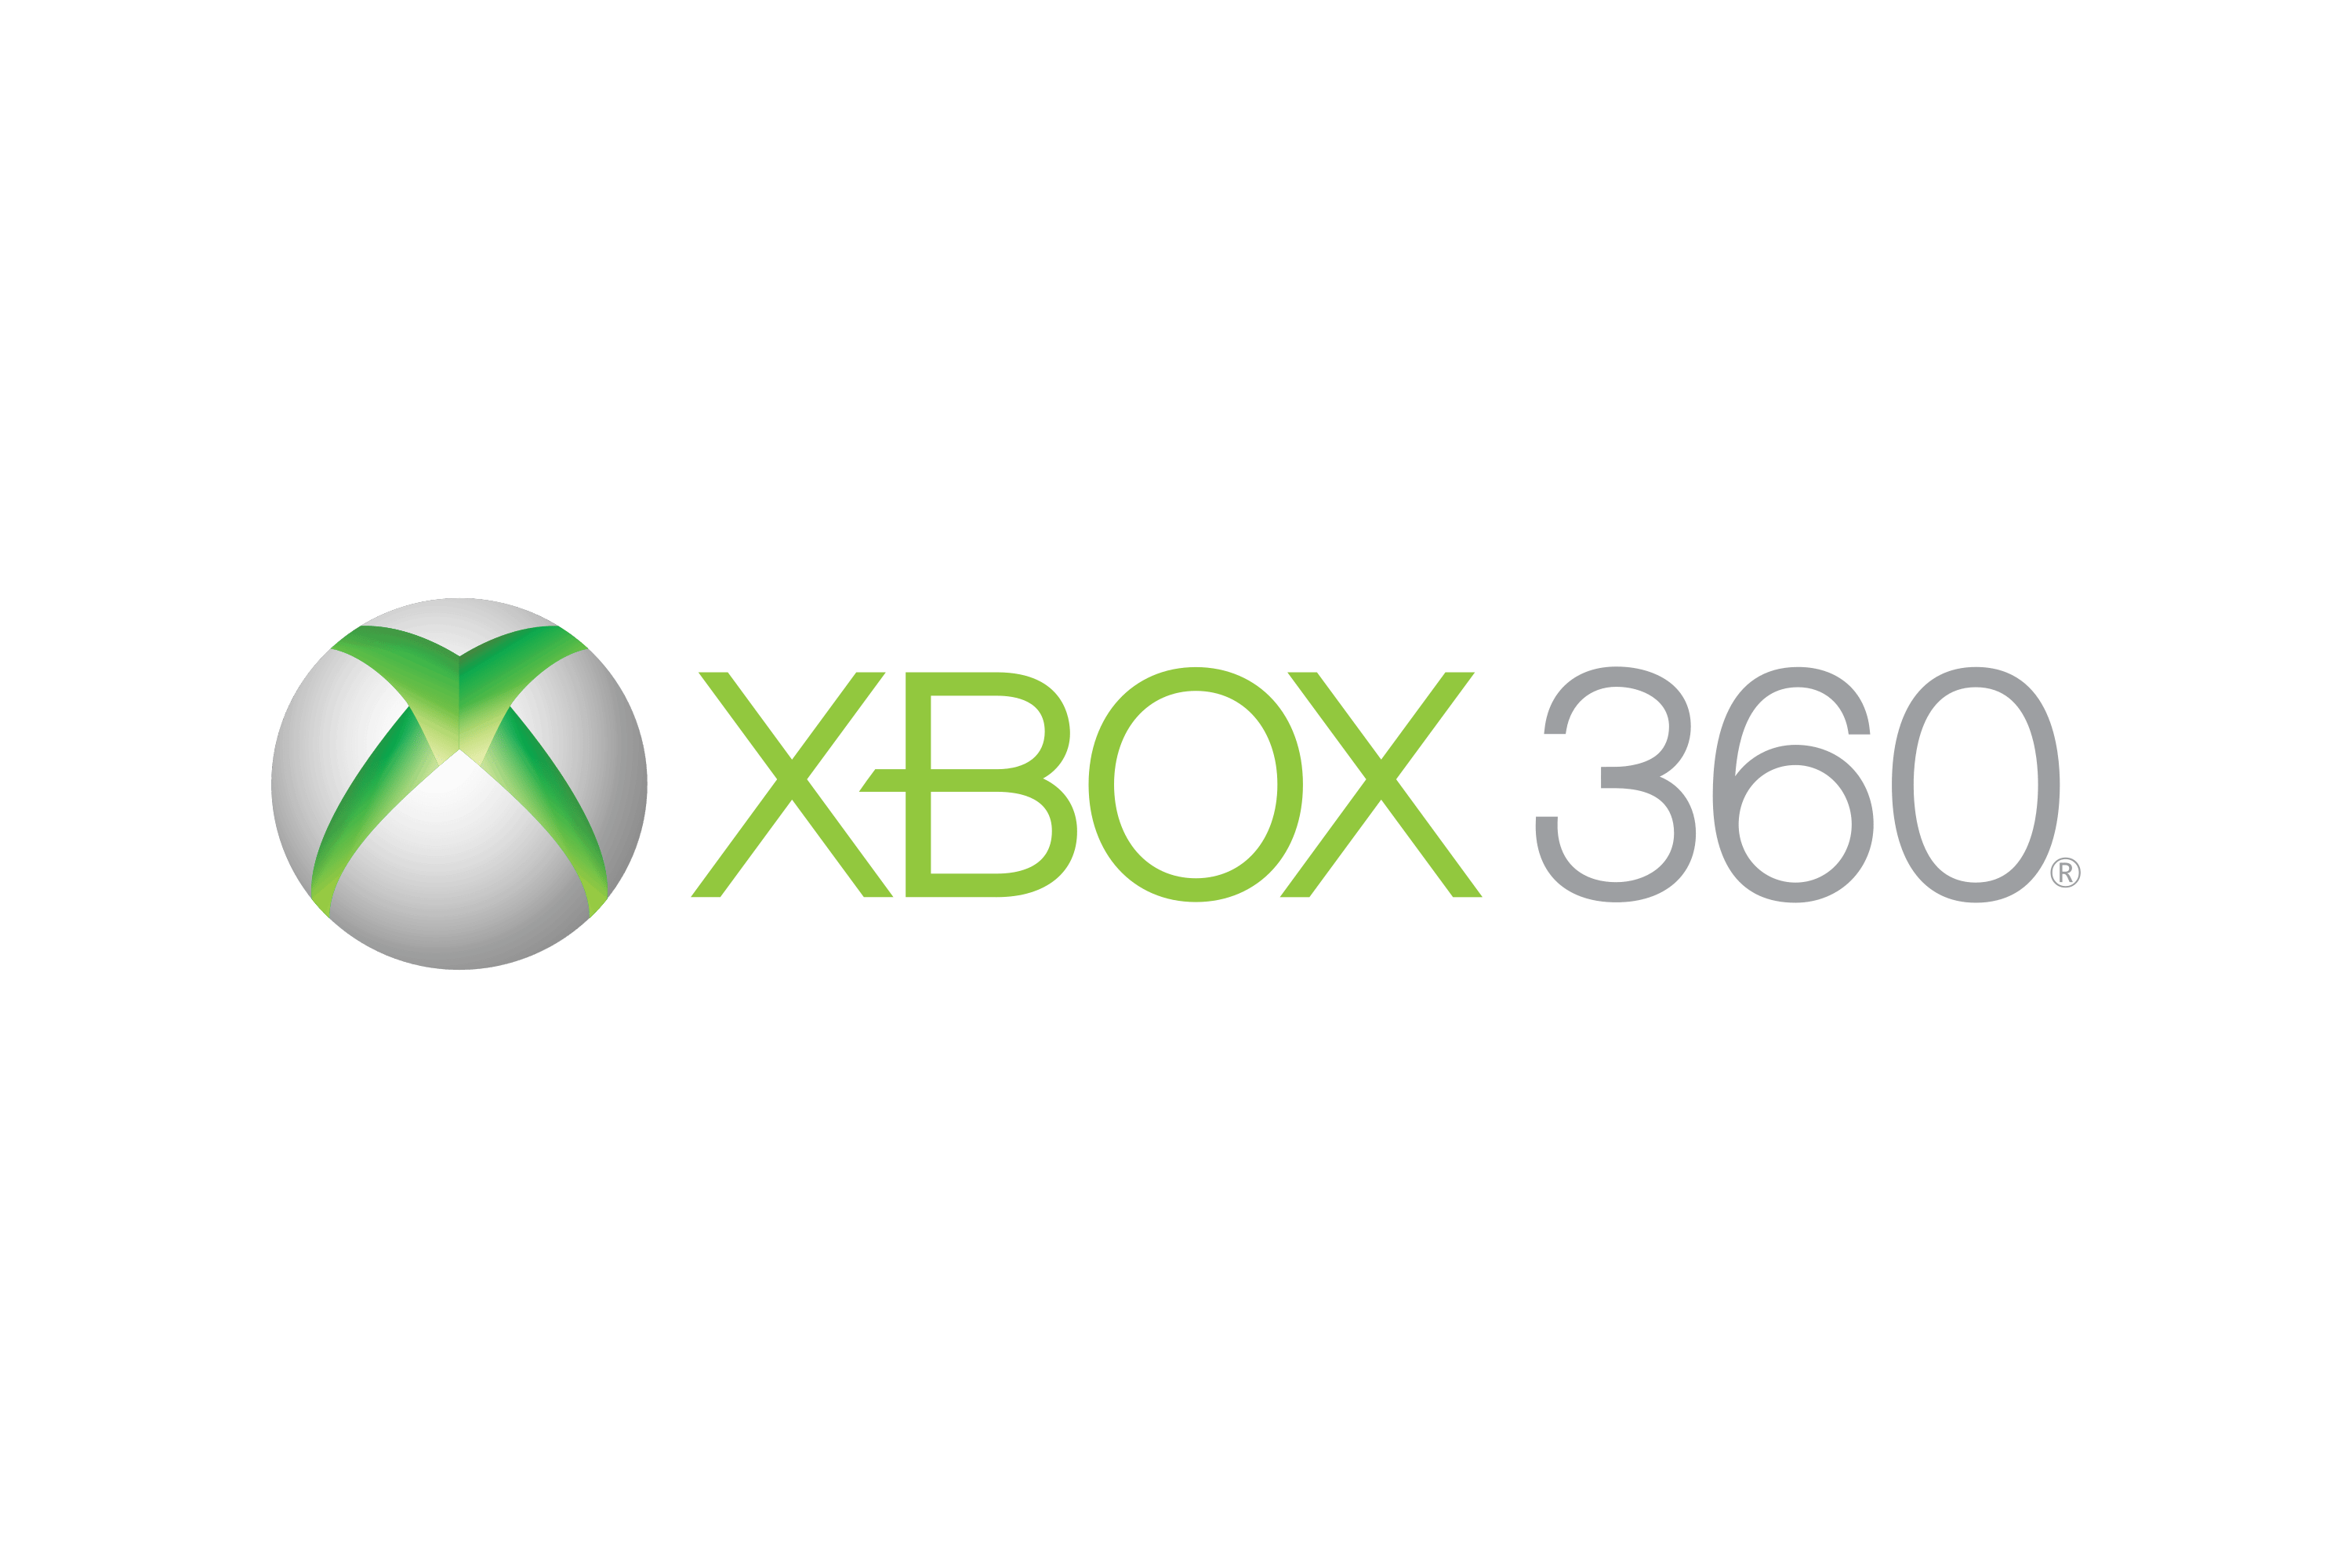 How to setup Xbox 360